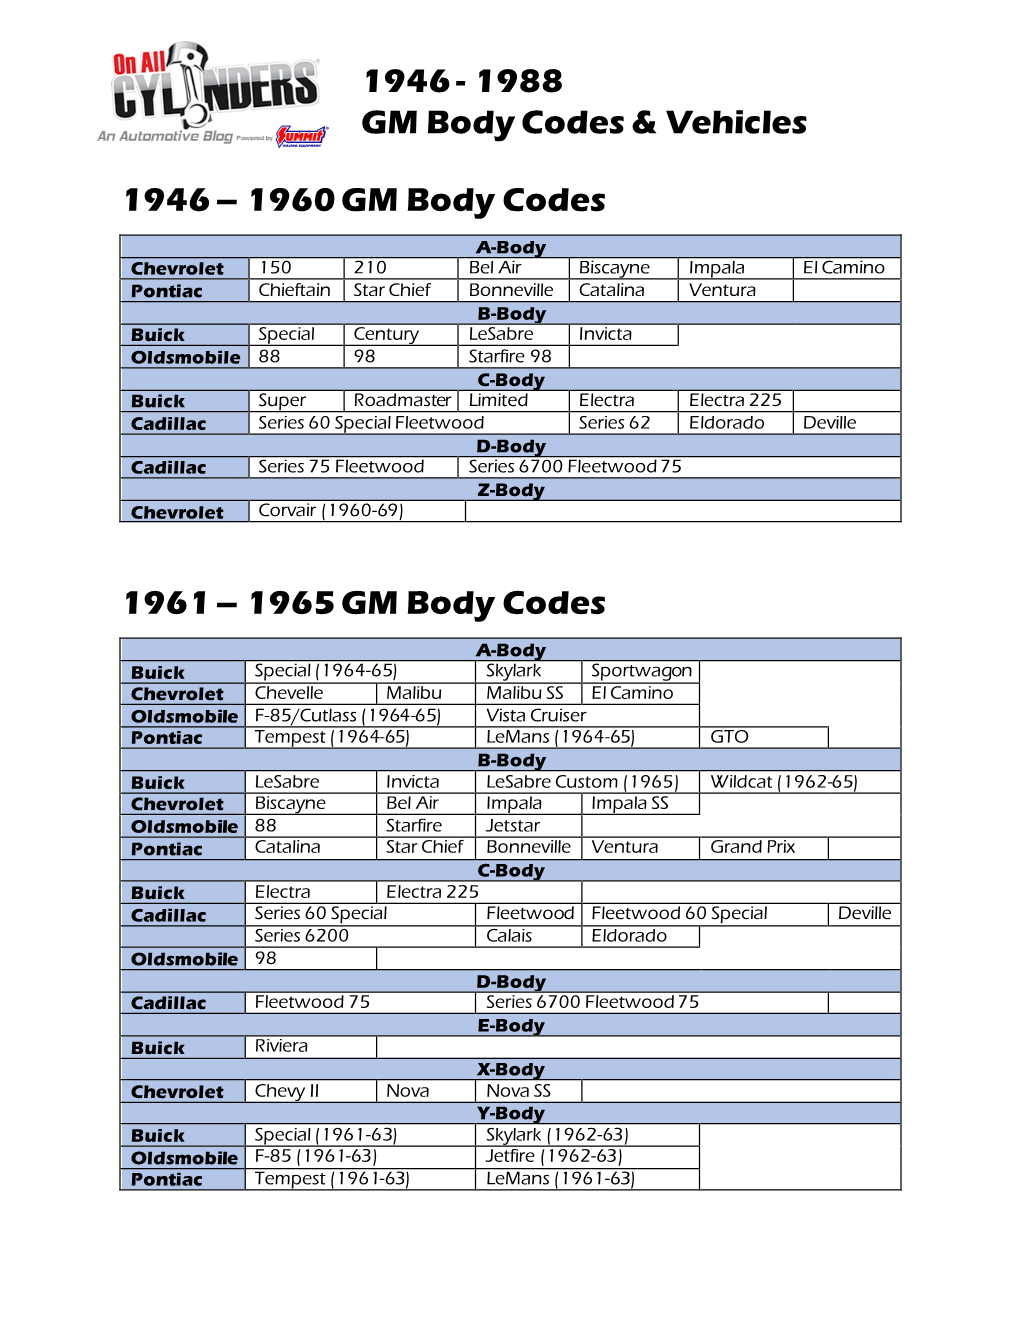 1988 GM Body Codes & Vehicles 1946